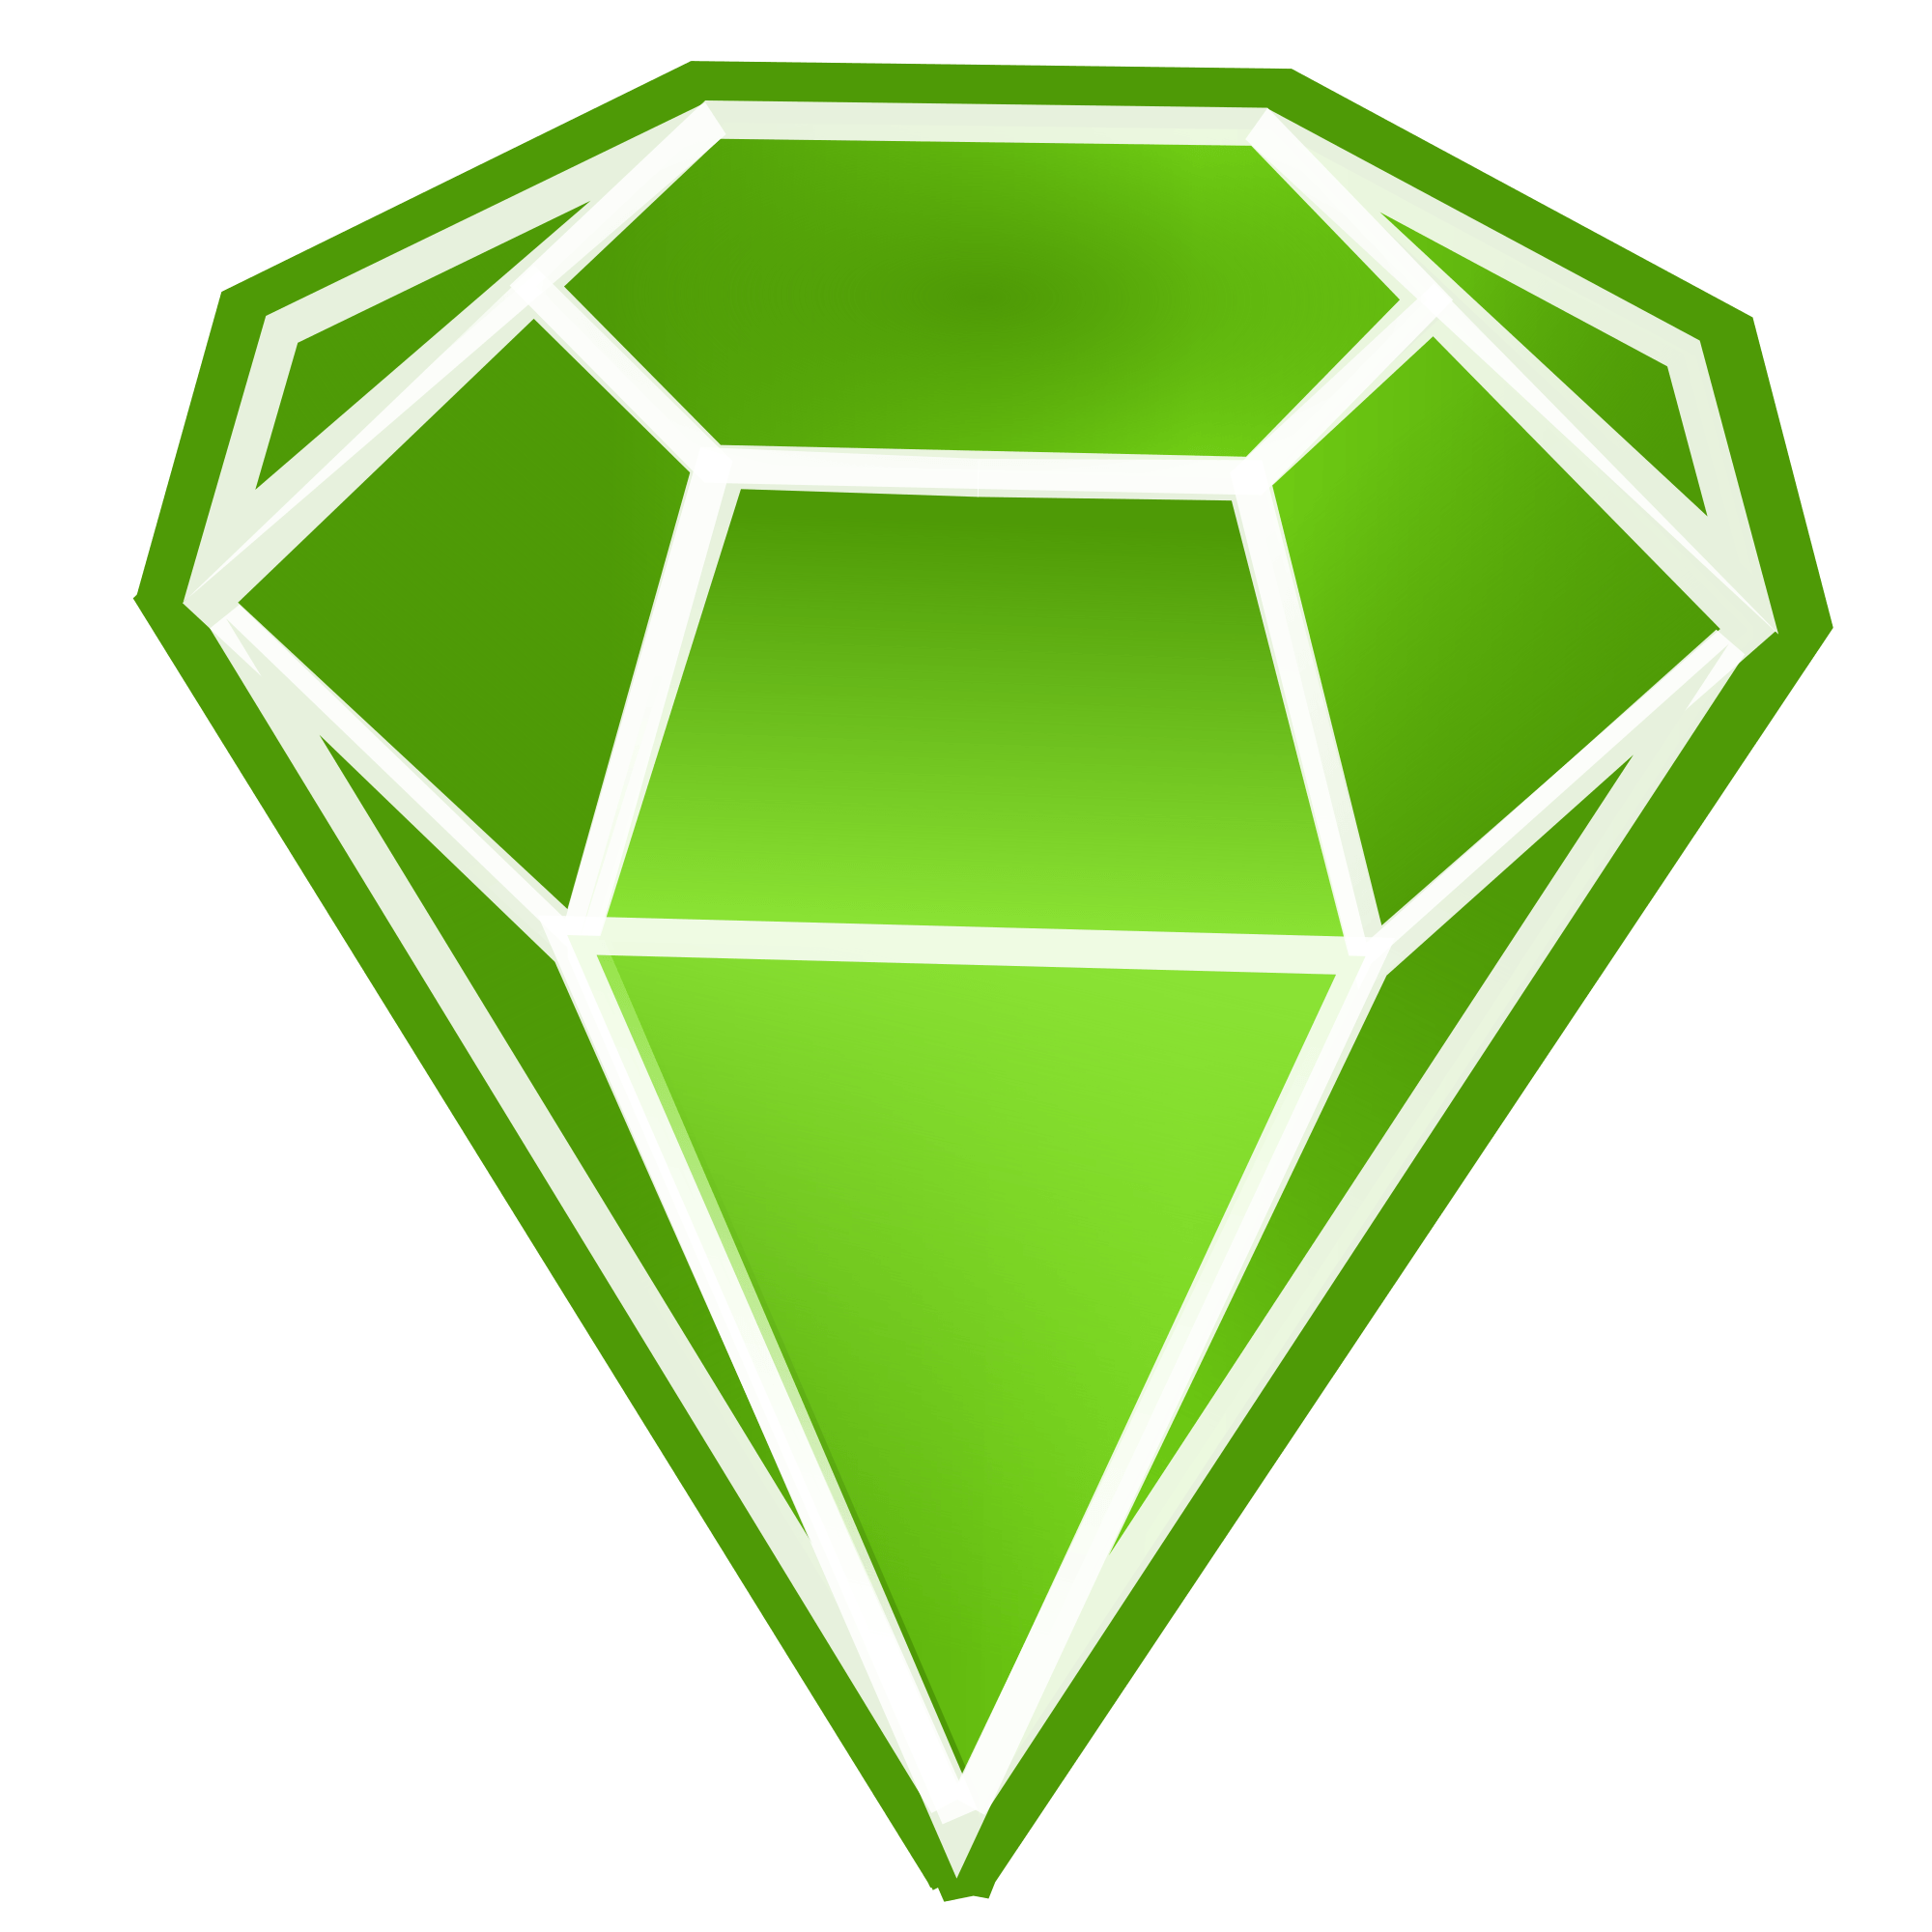 The Emerald Logo - File:Emerald Logo.svg - Wikimedia Commons